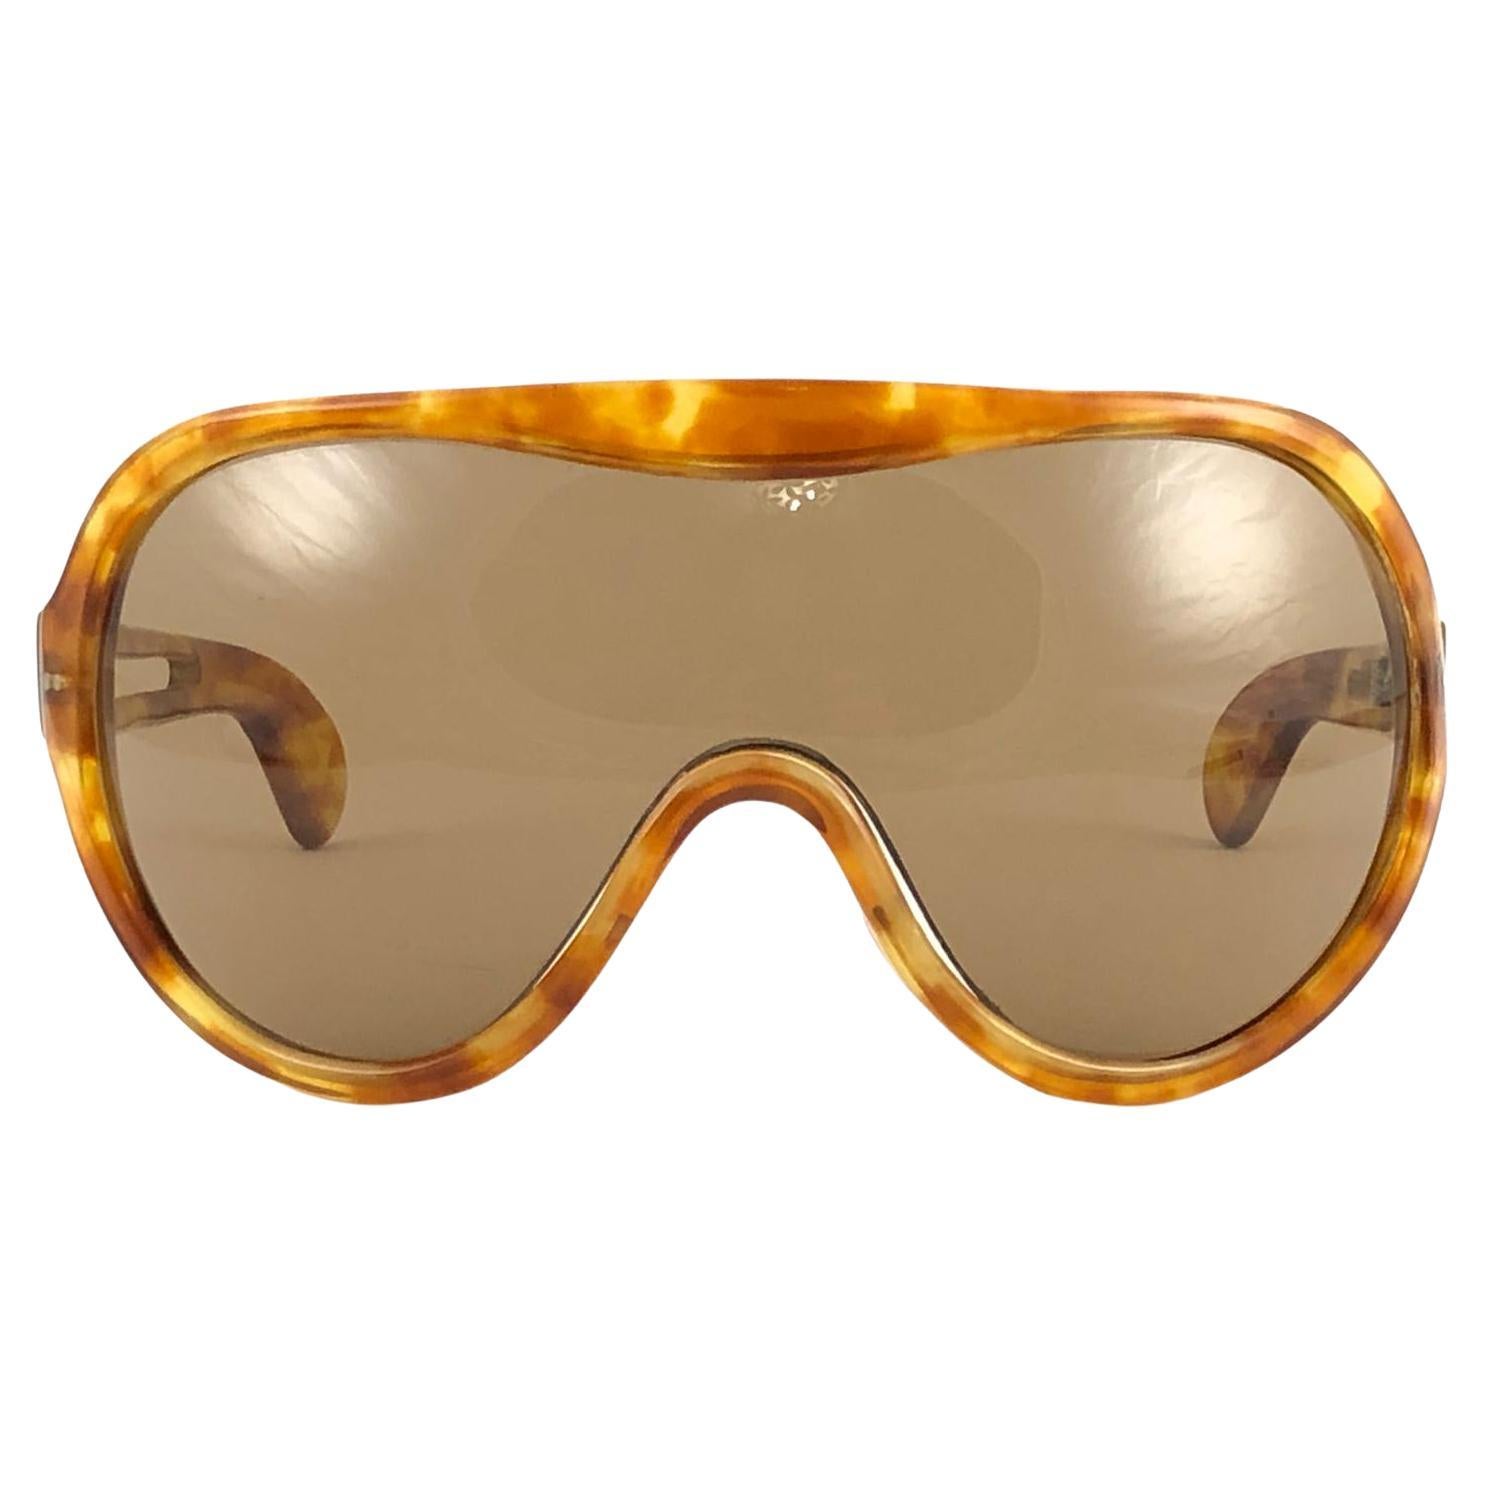 New Rare Vintage Philippe Chevallier Light Tortoise Miles Davis 1960 Sunglasses